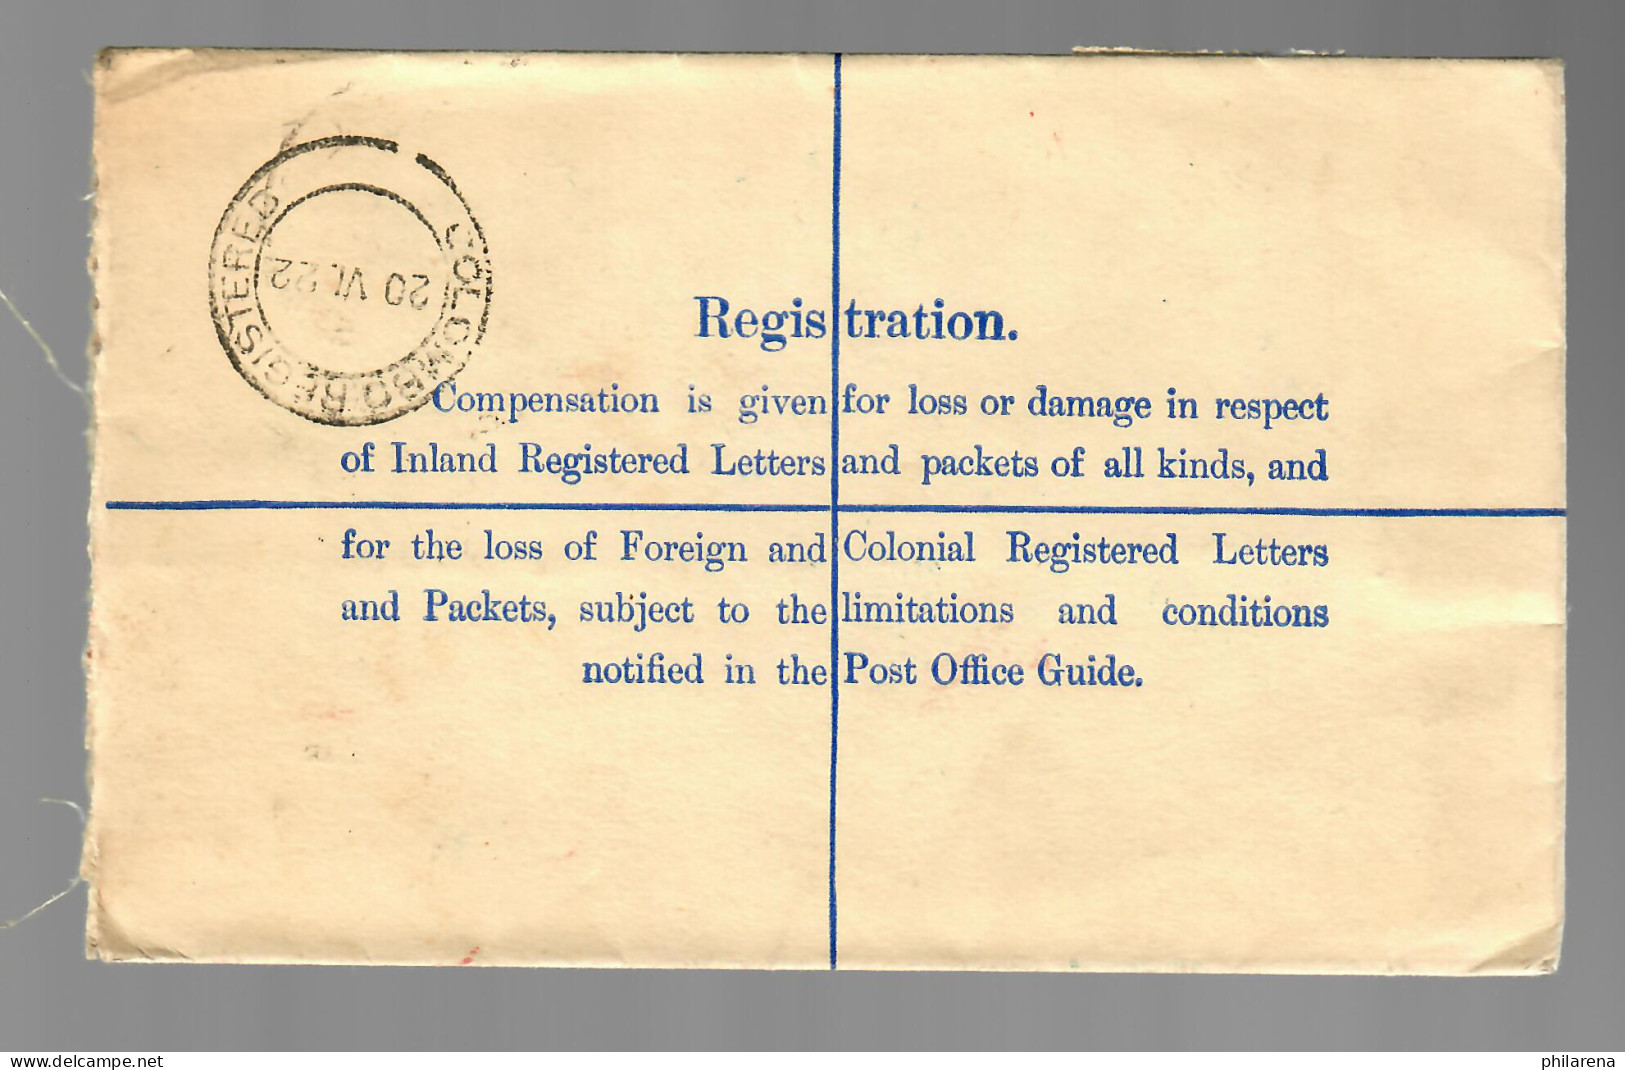 Registered Letter Colombo Courts To London 1922 - Sri Lanka (Ceylon) (1948-...)